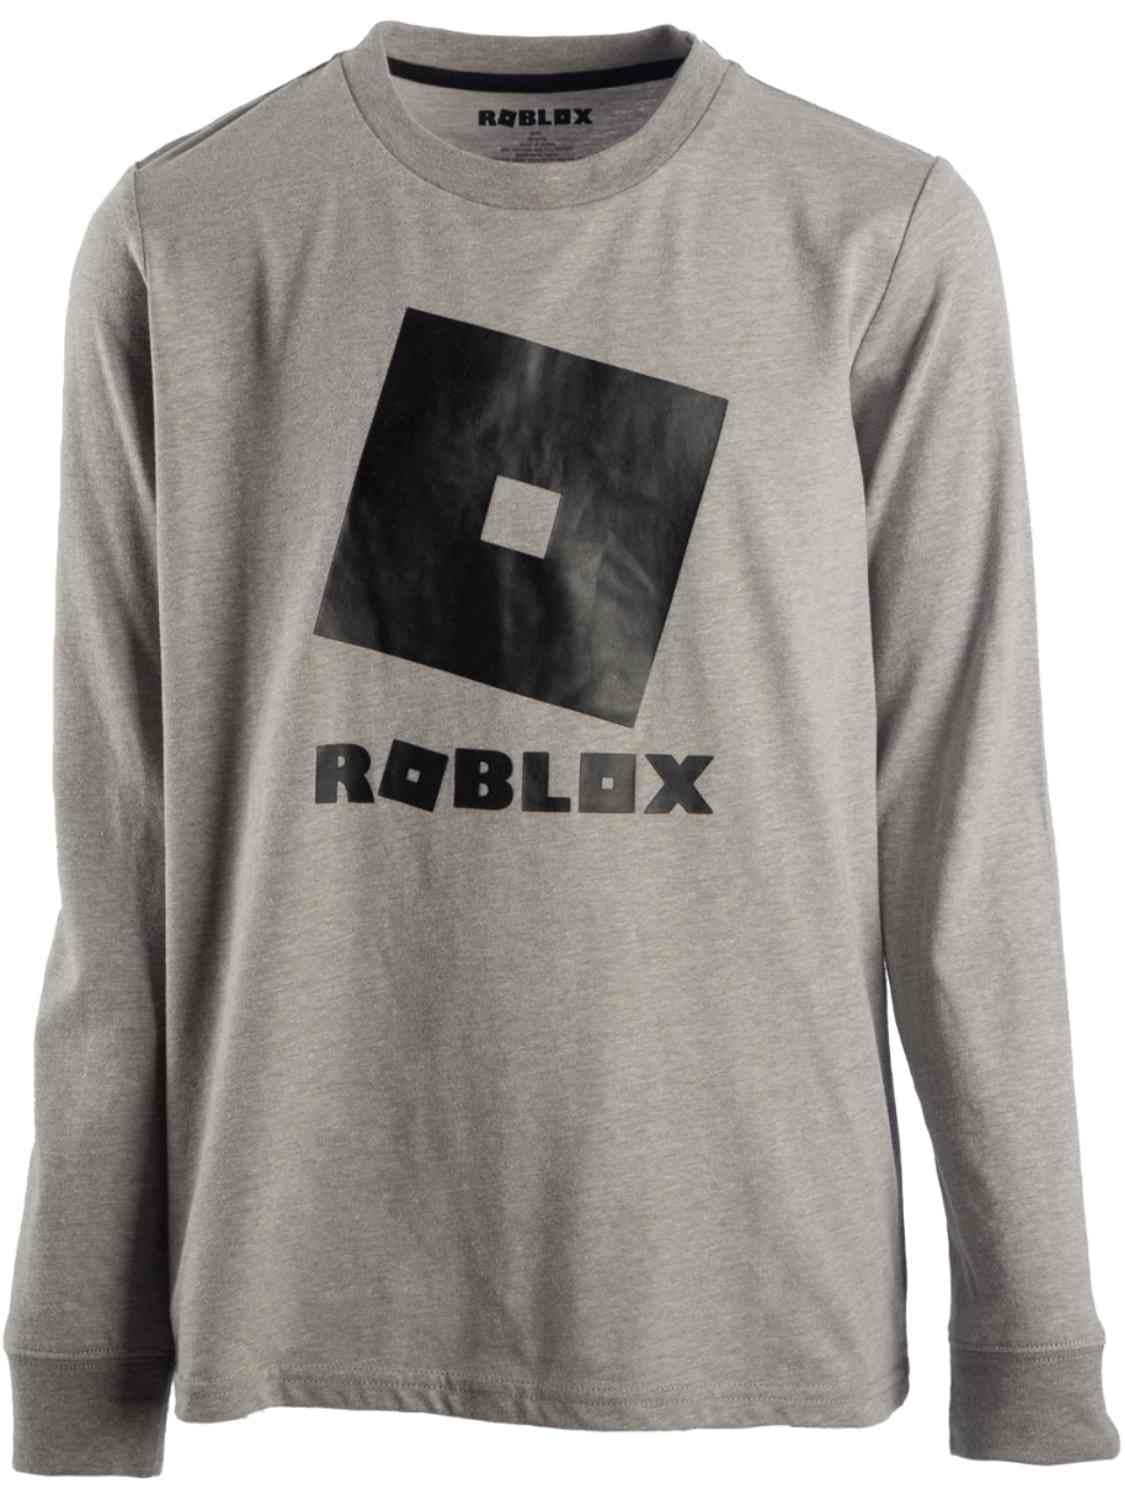 Boys Gray Black Roblox T Shirt Long Sleeve Tee Shirt Walmart Com Walmart Com - roblox t shirt black and white